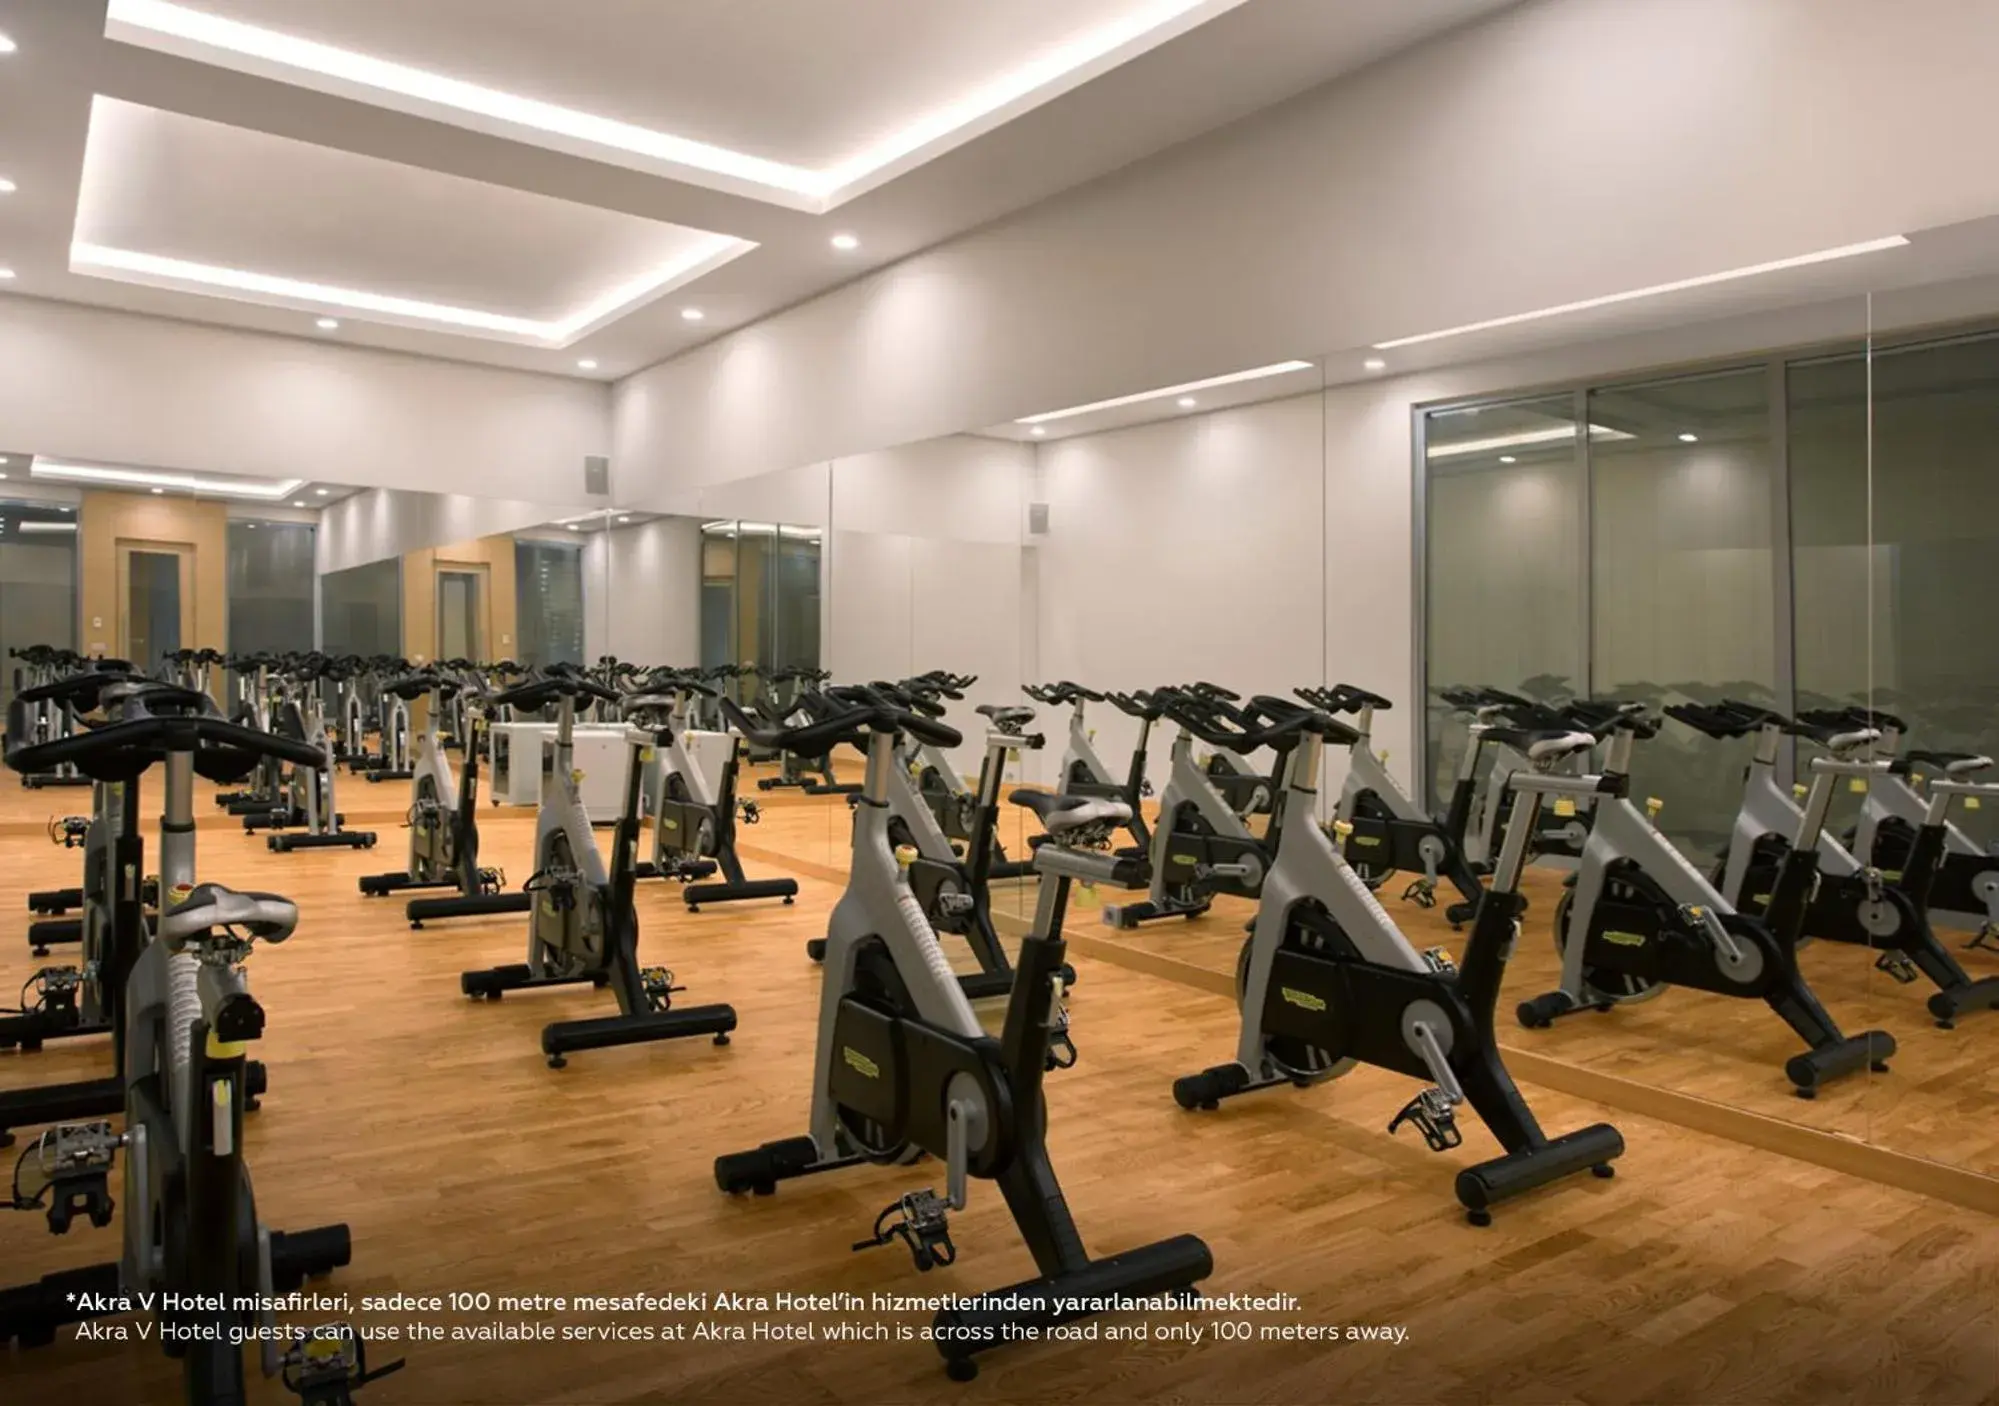 Fitness centre/facilities, Fitness Center/Facilities in Akra V Hotel